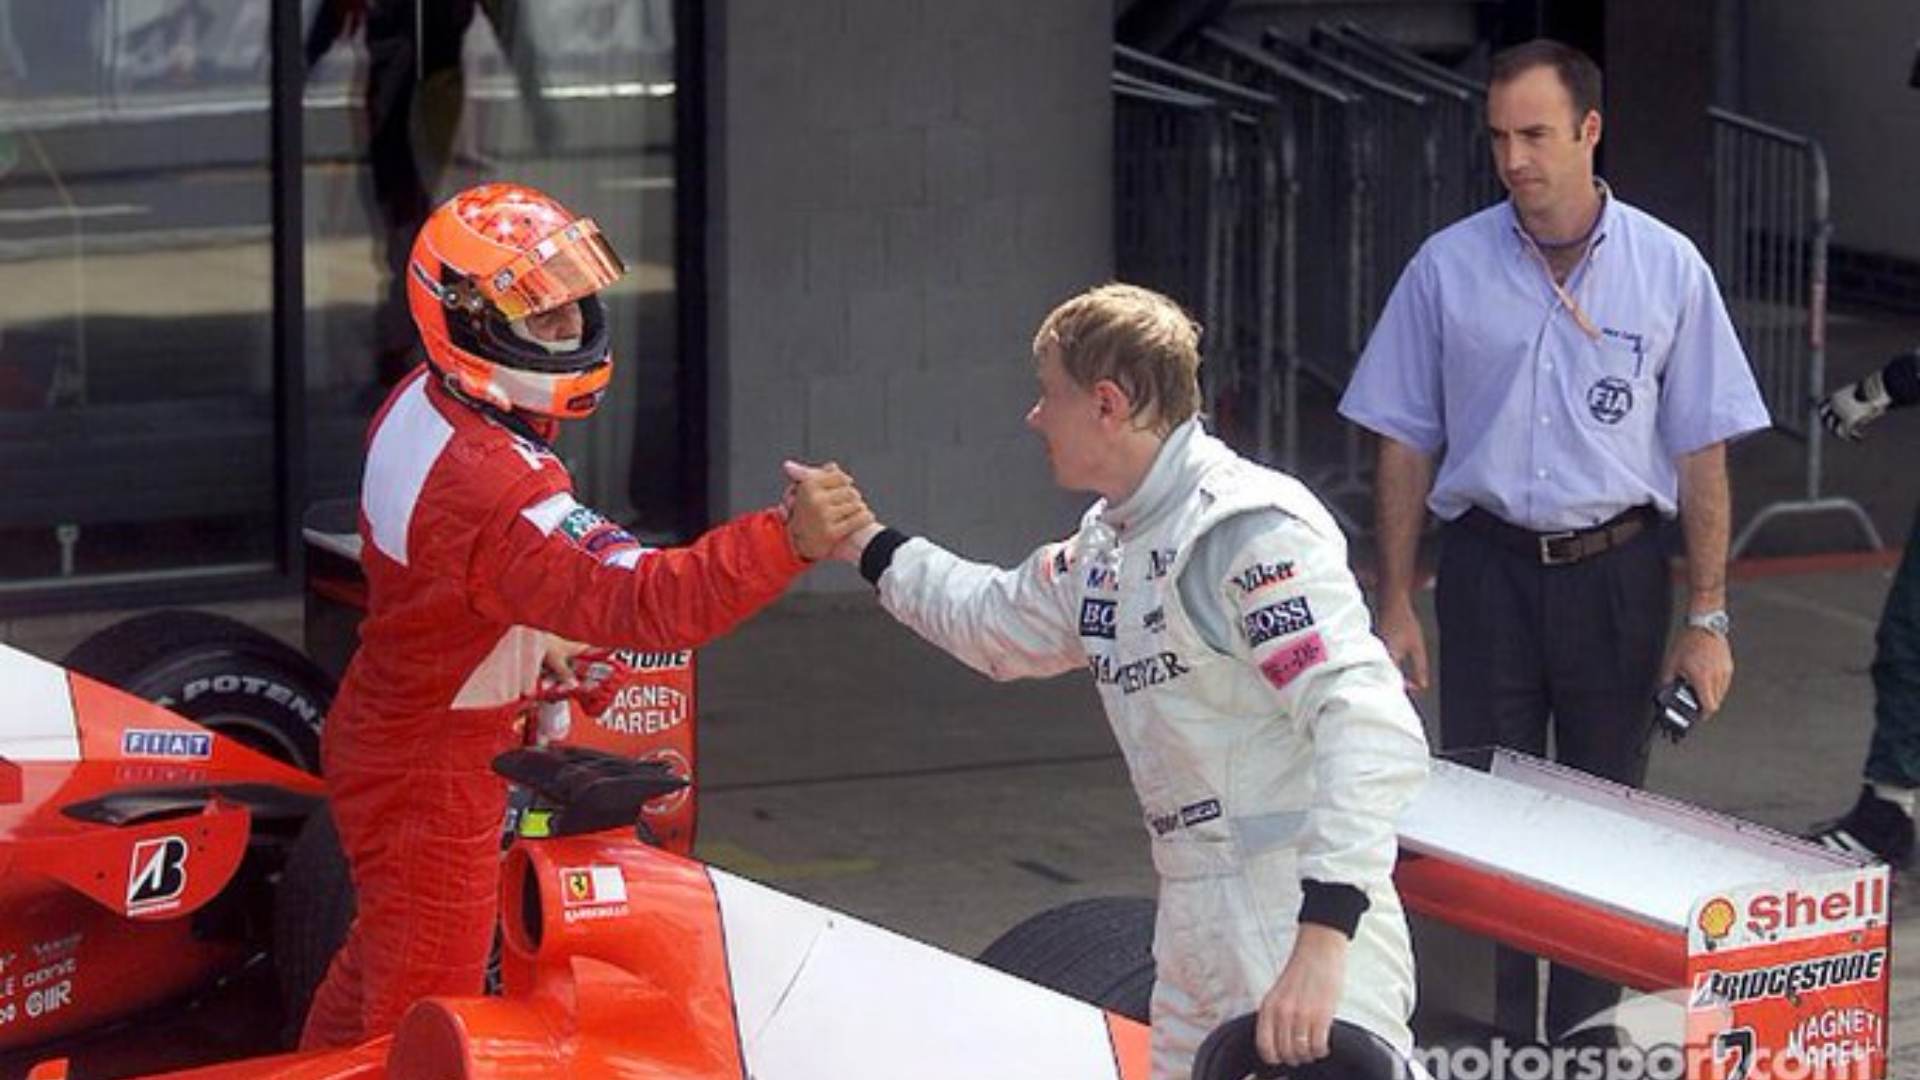 Michael Schumacher and Mika Hakkinen had an intense rivalry in F1.